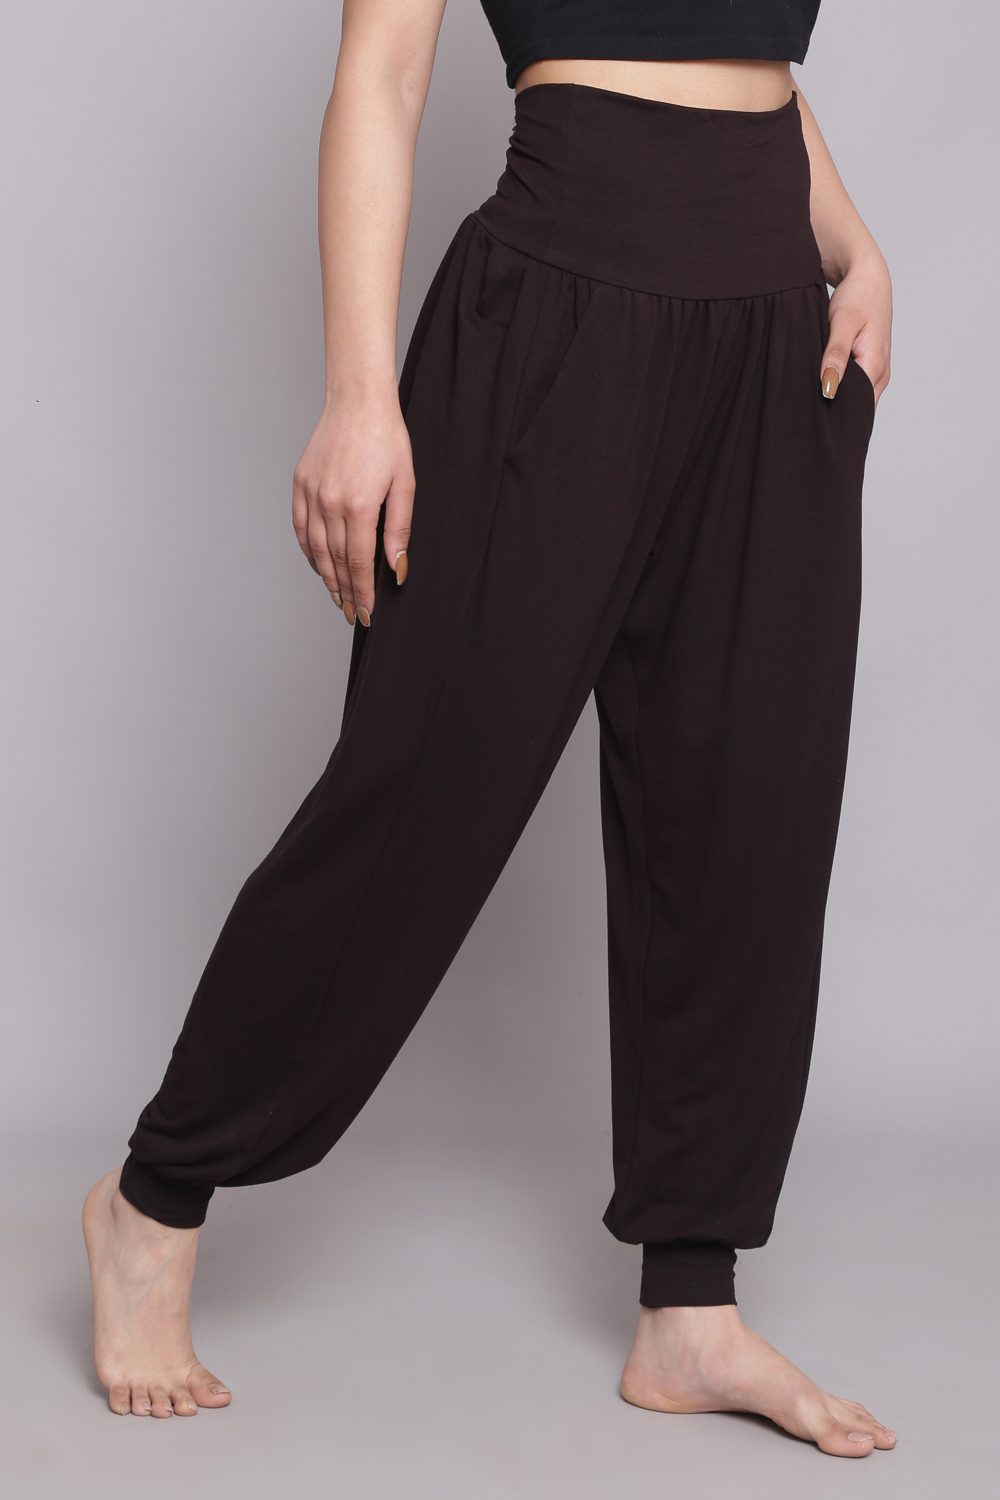 Harem Pants for Women/Women's Yoga Pants with Pockets (S-XXL